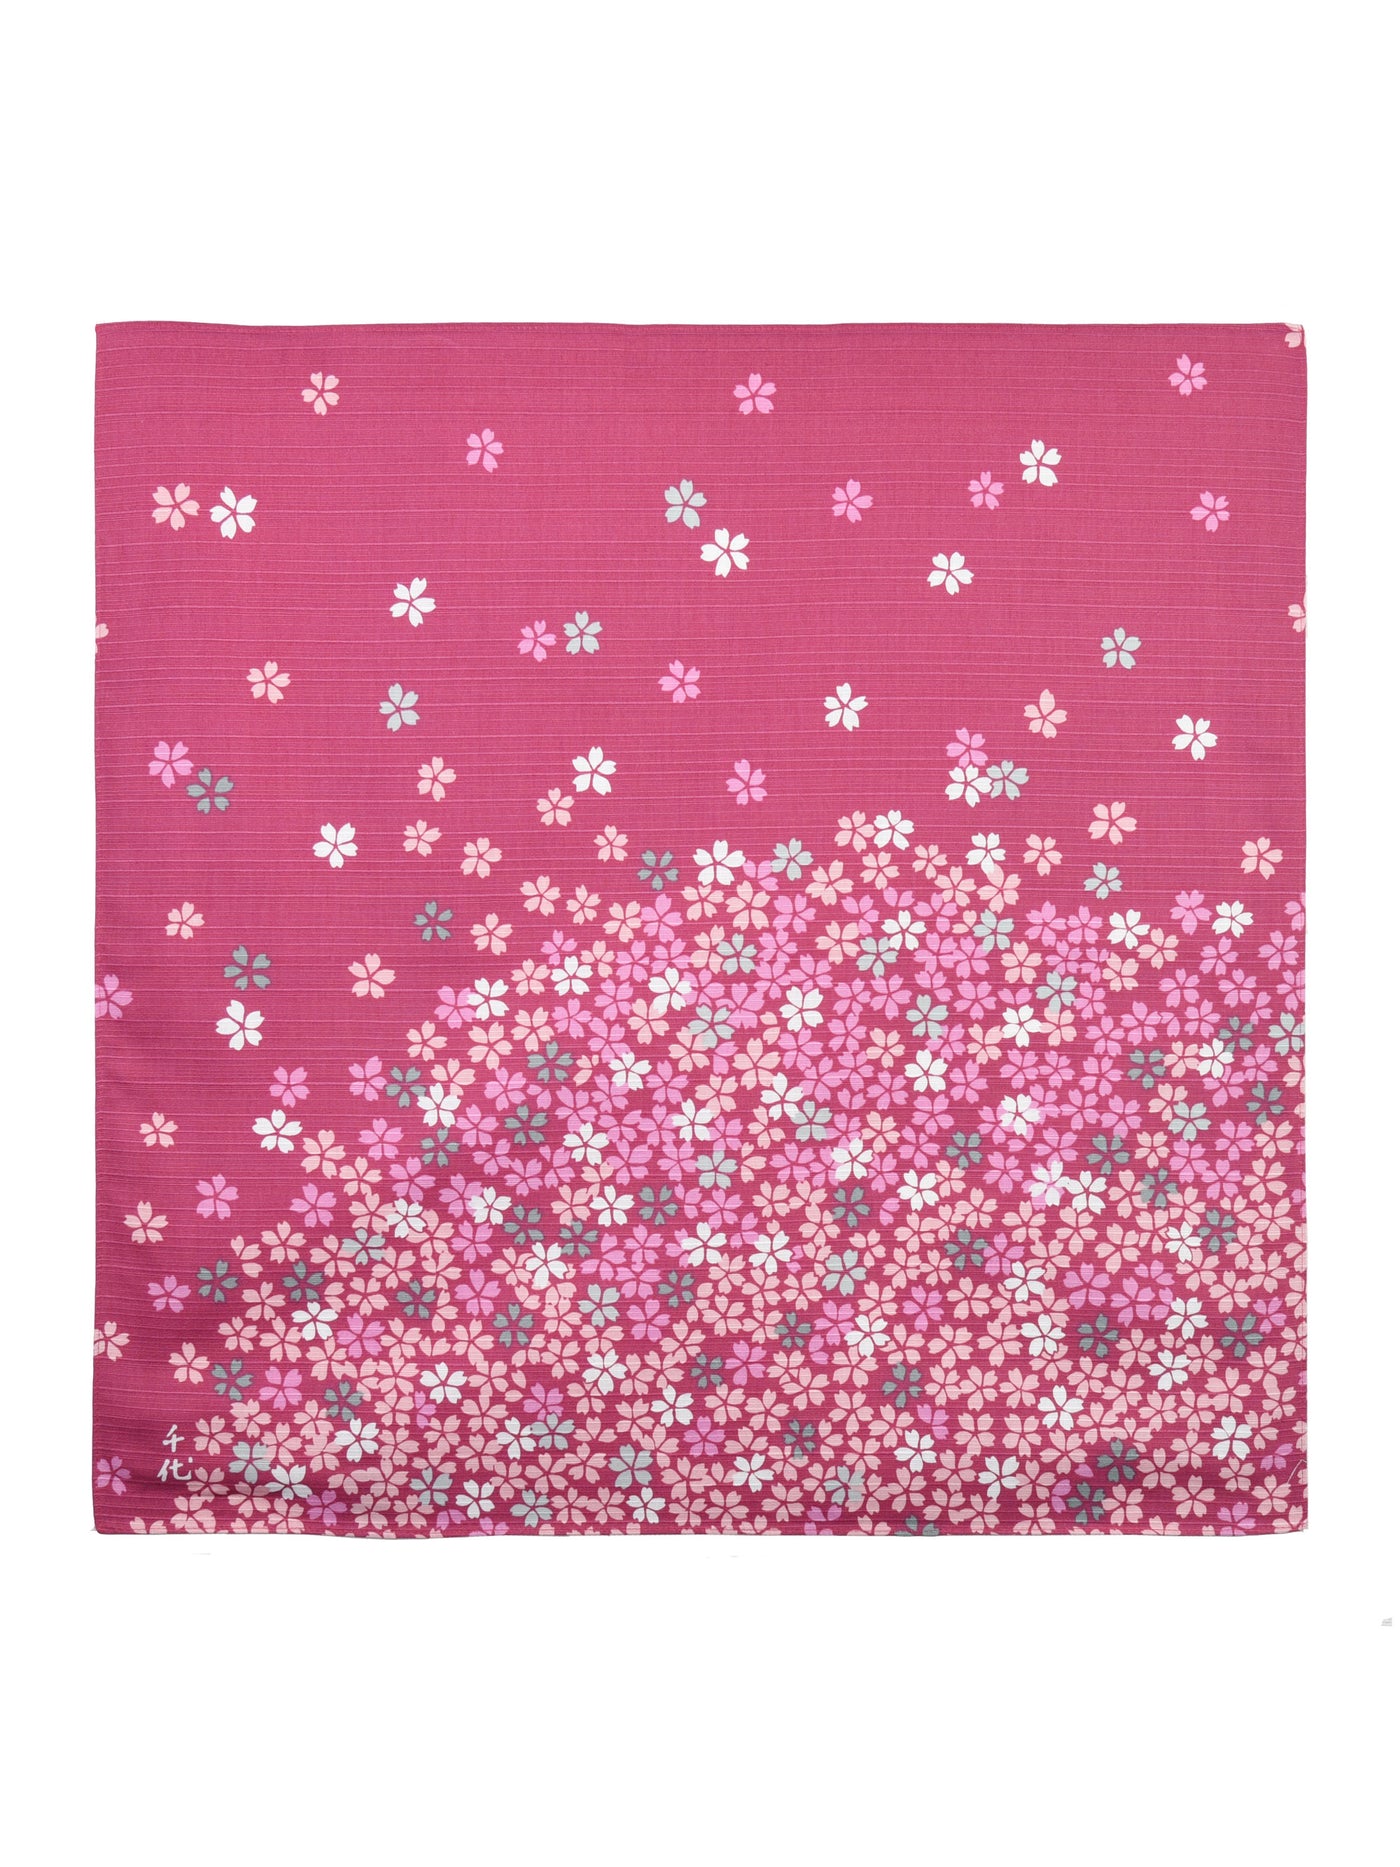 Falling Cherry Blossom Furoshiki Cloth